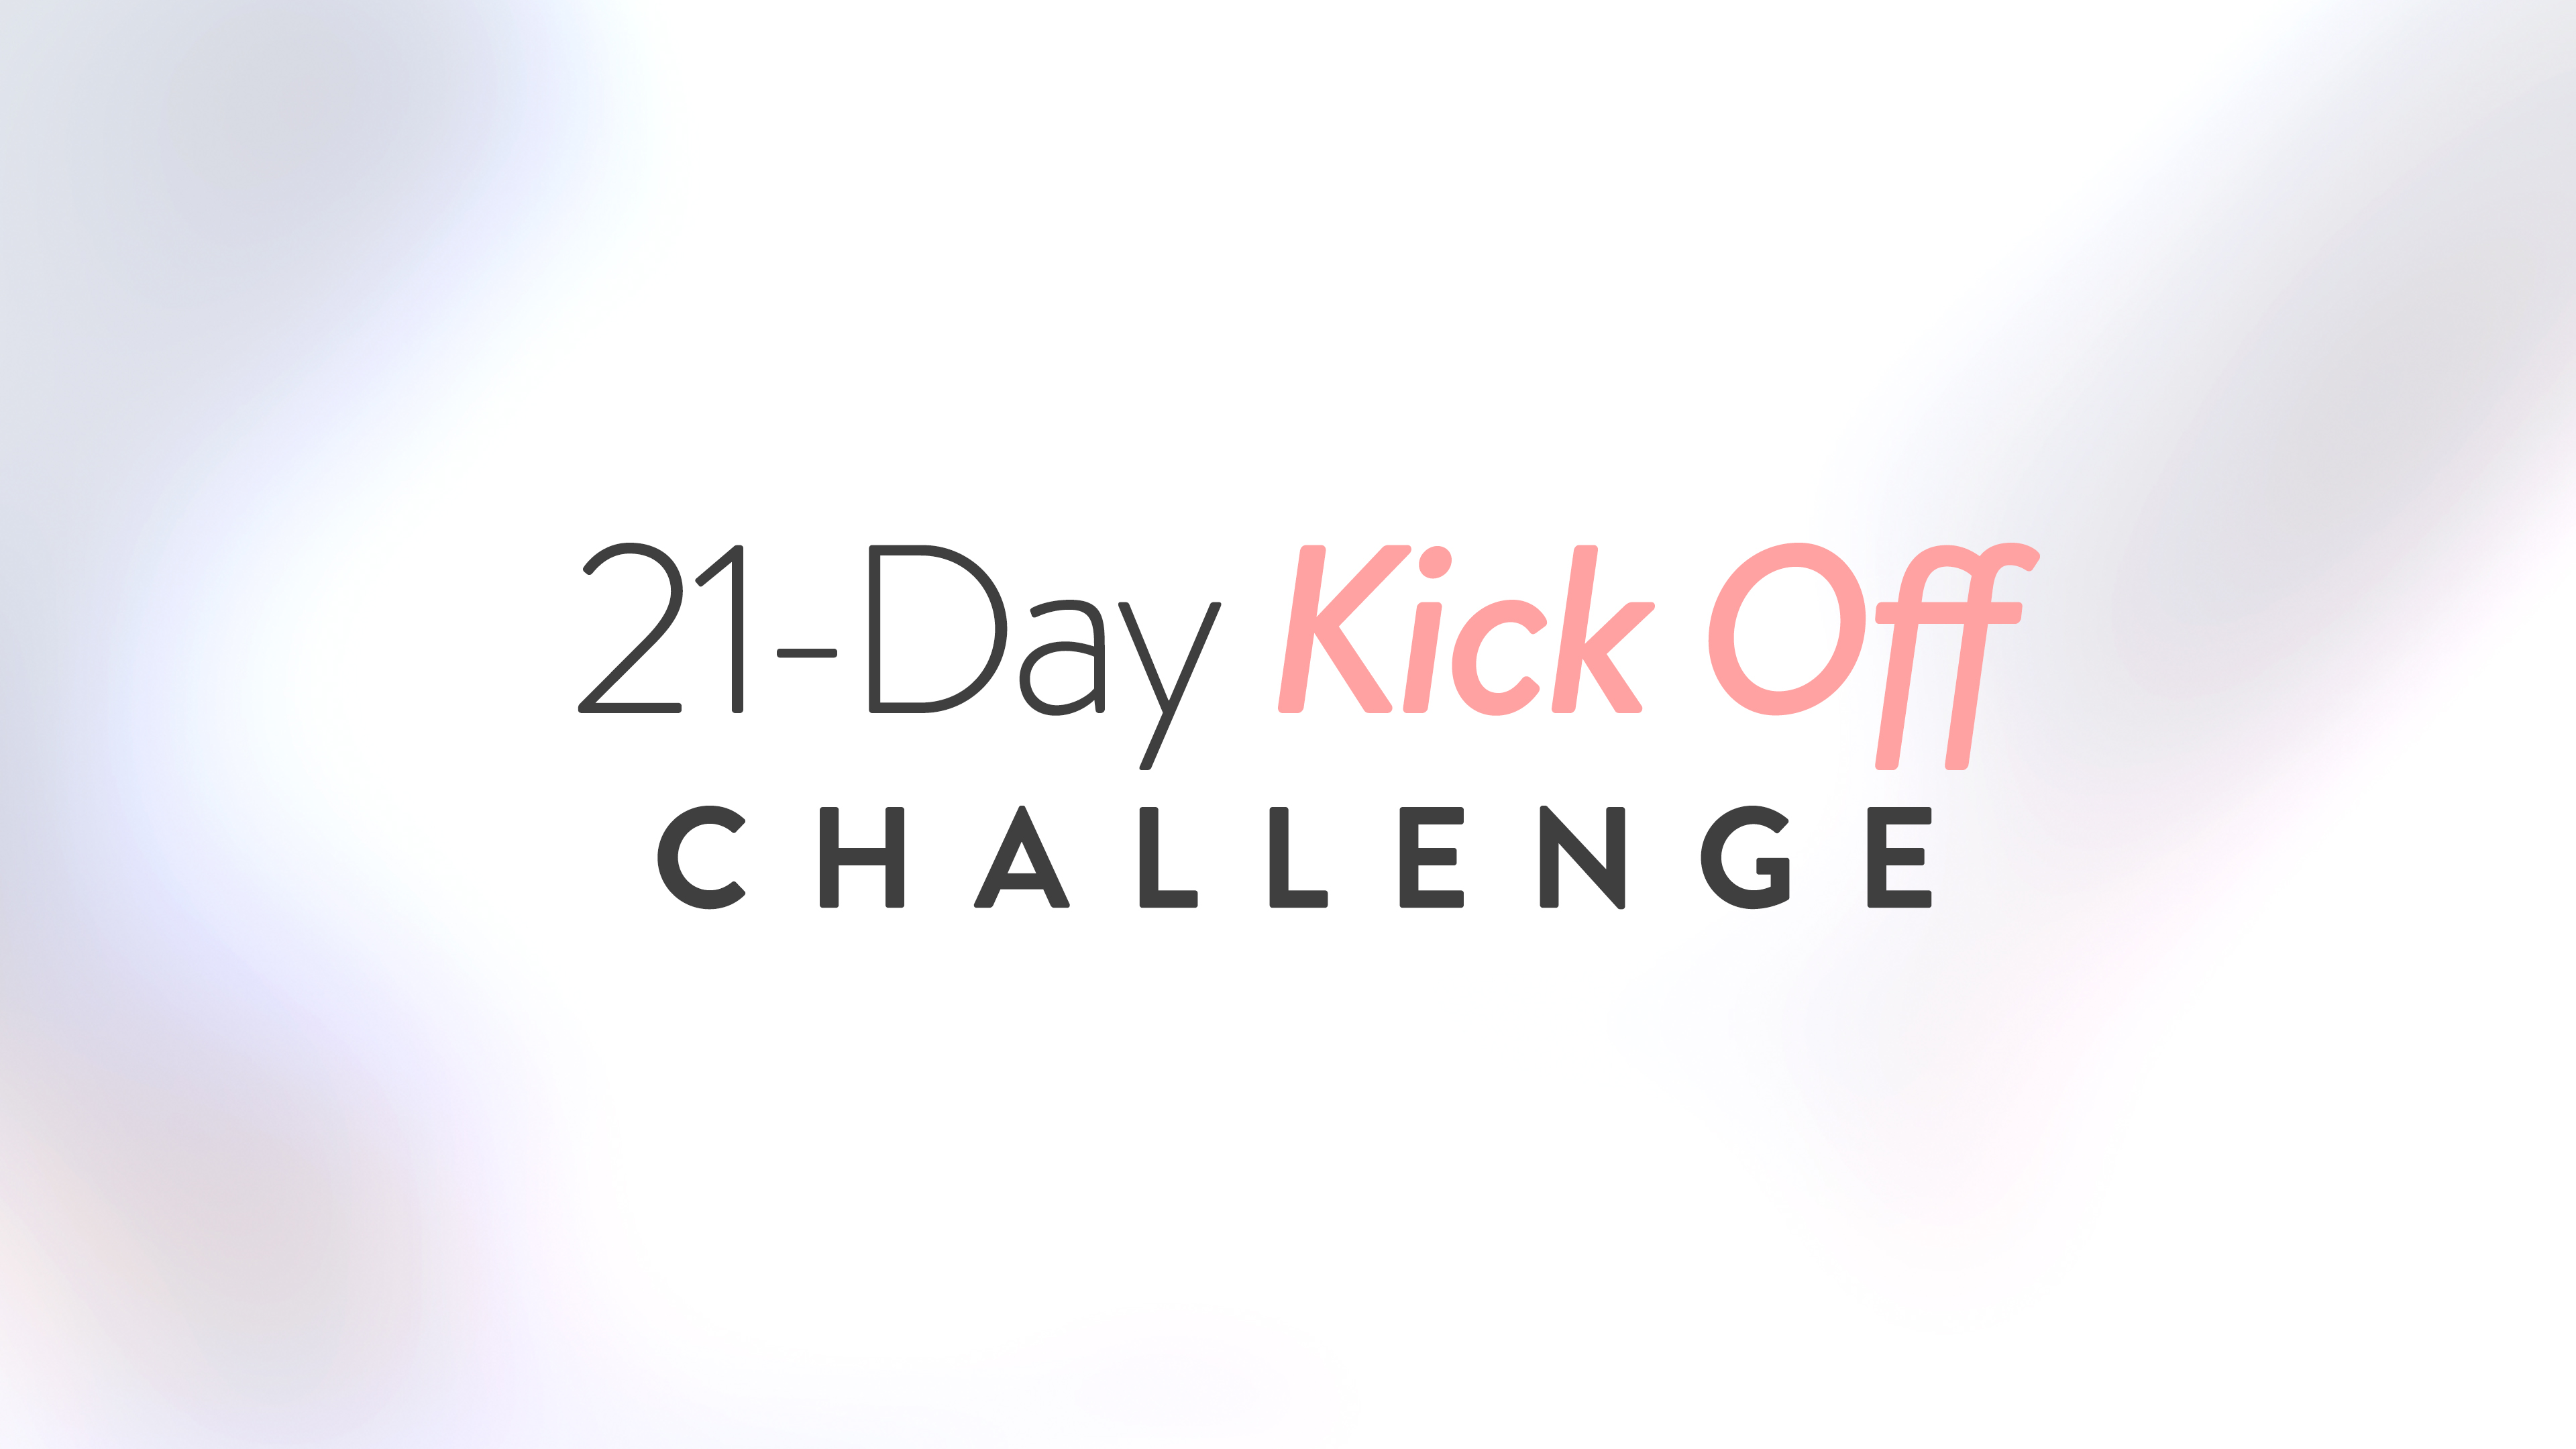 21 Day Kick Off Challenge!